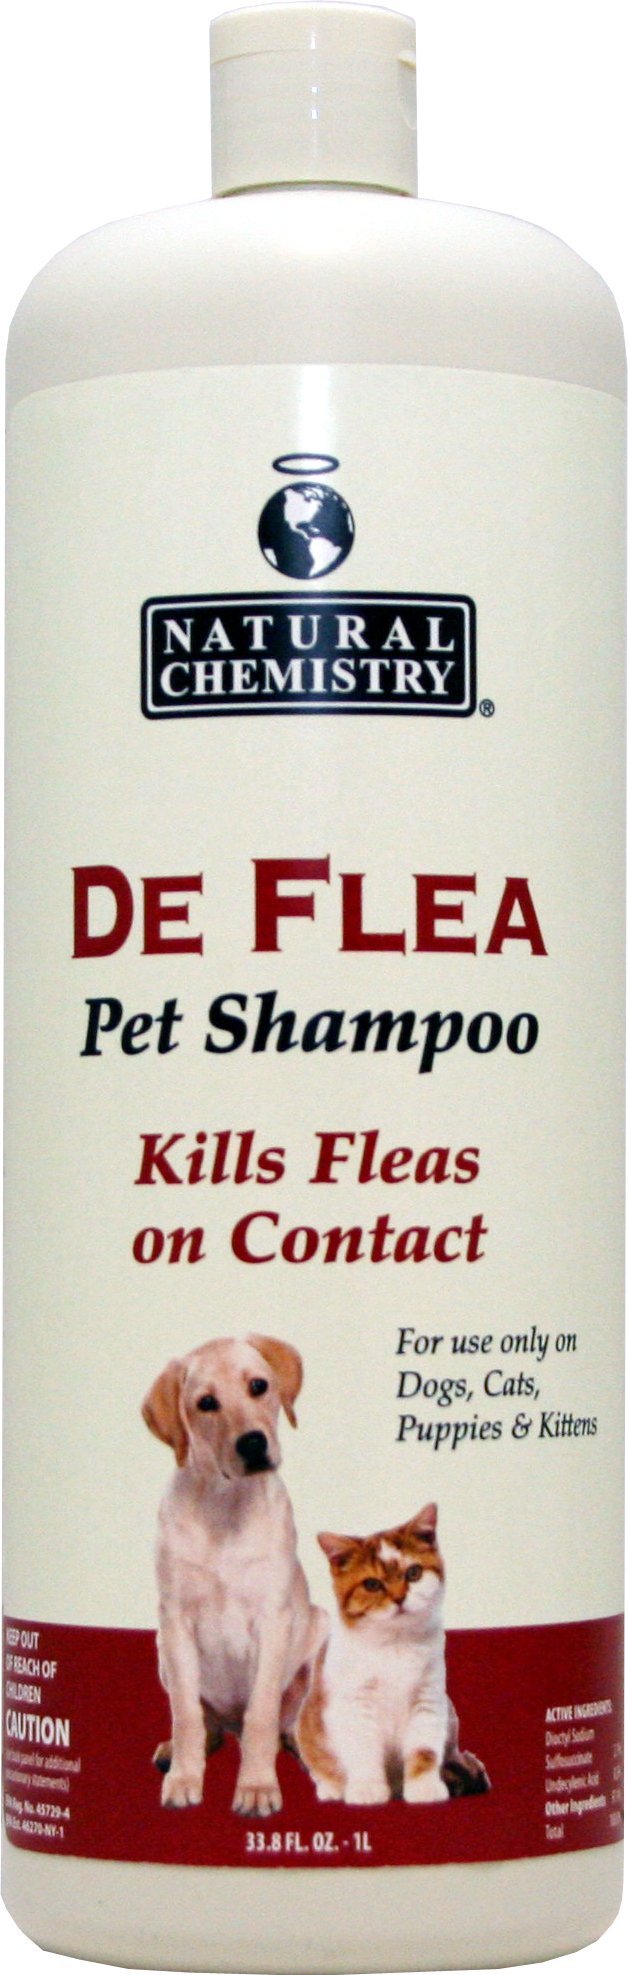 [Australia] - DeFlea Ready to Use Flea & Tick Shampoo for Dogs and Puppies 33.8oz 